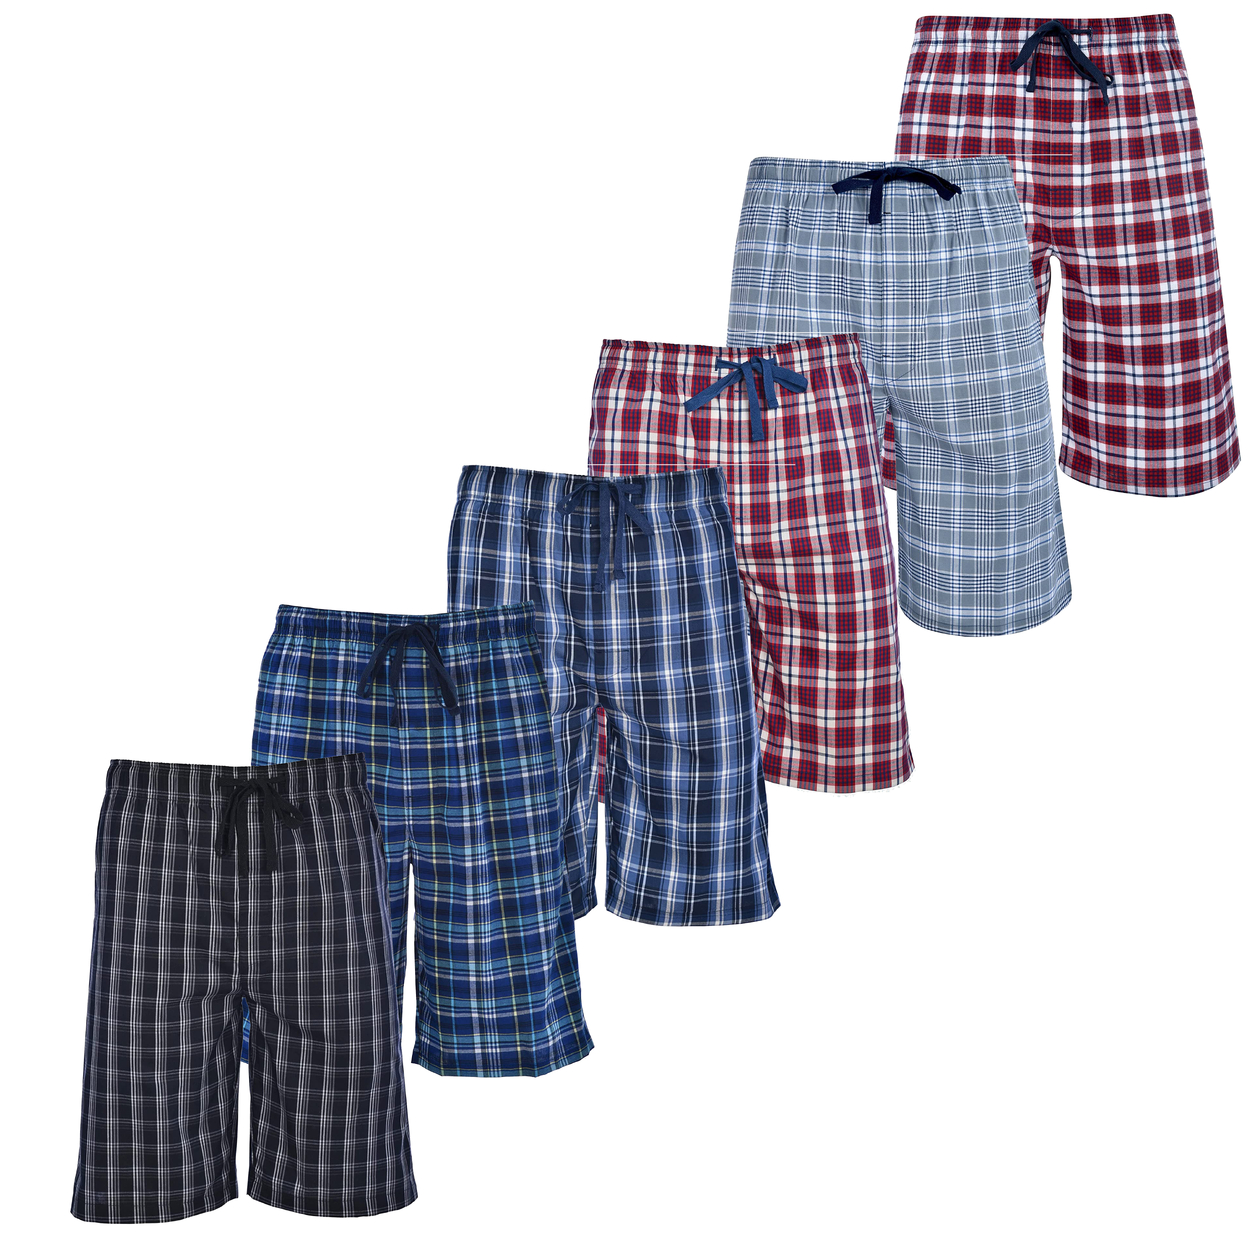 Multi-Pack: Men's Ultra Soft Plaid Lounge Pajama Sleep Wear Shorts - 1-pack, Medium